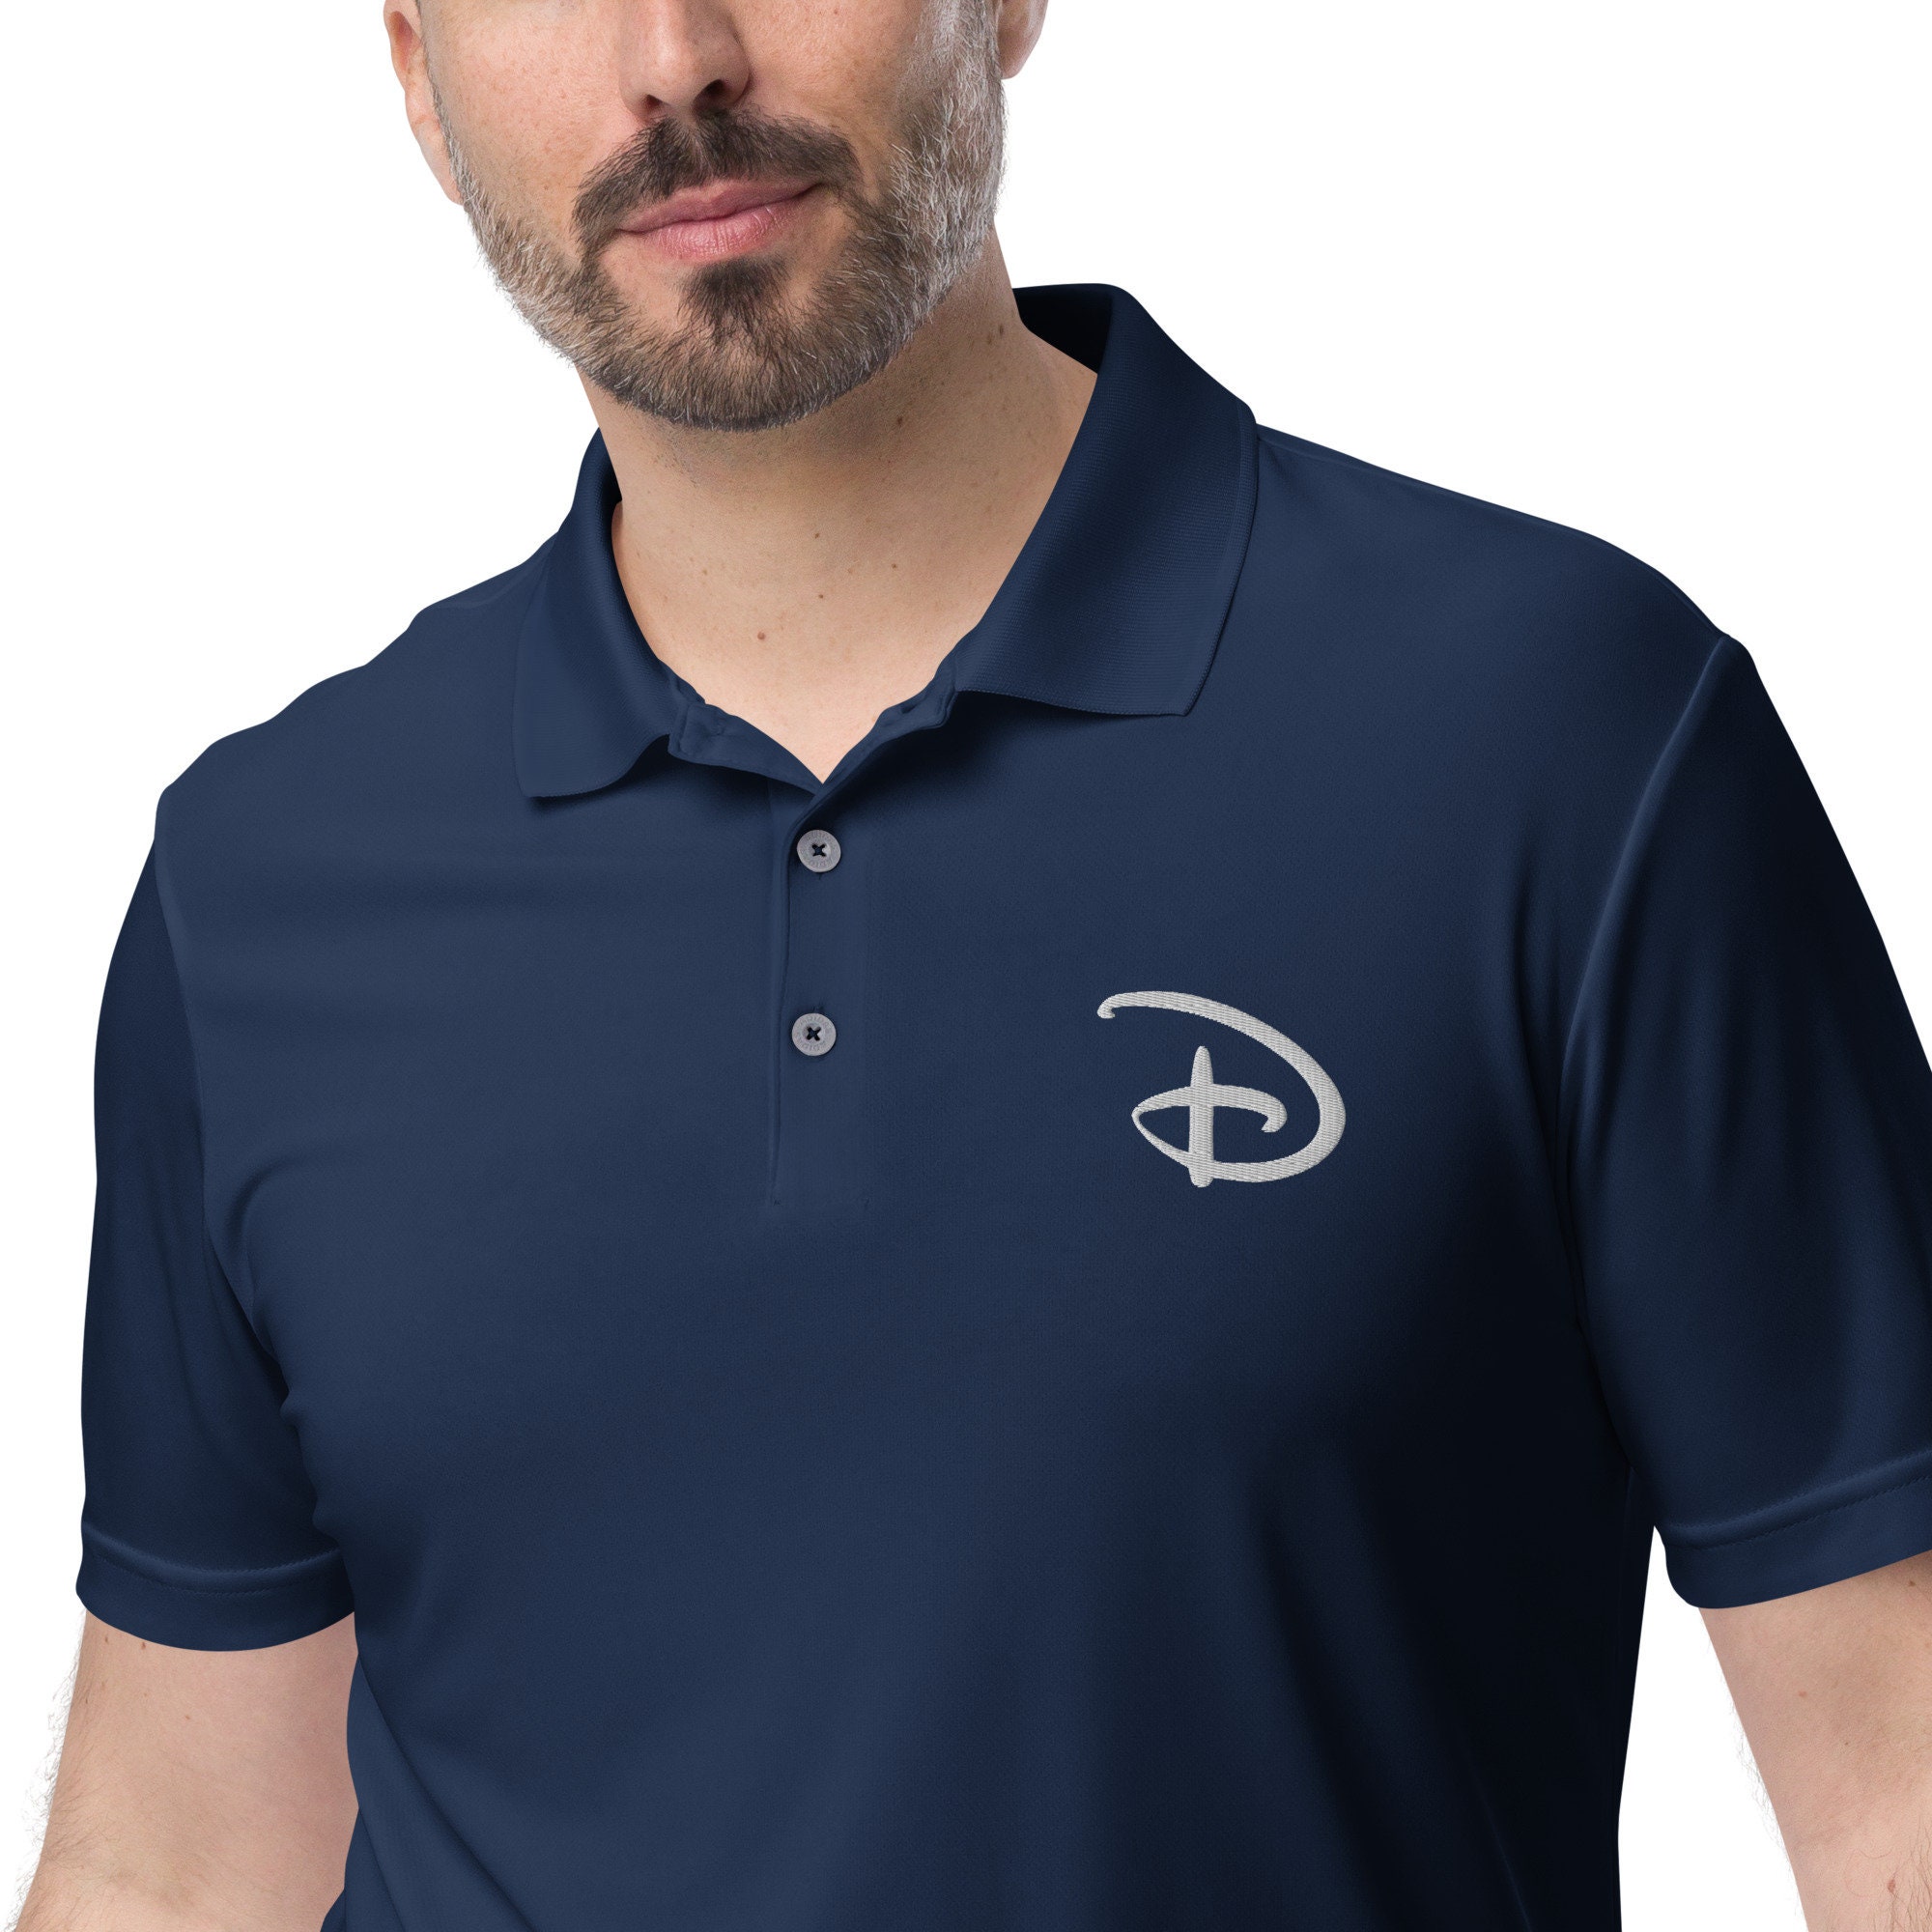 Disney Inspired Performance Polo Shirt